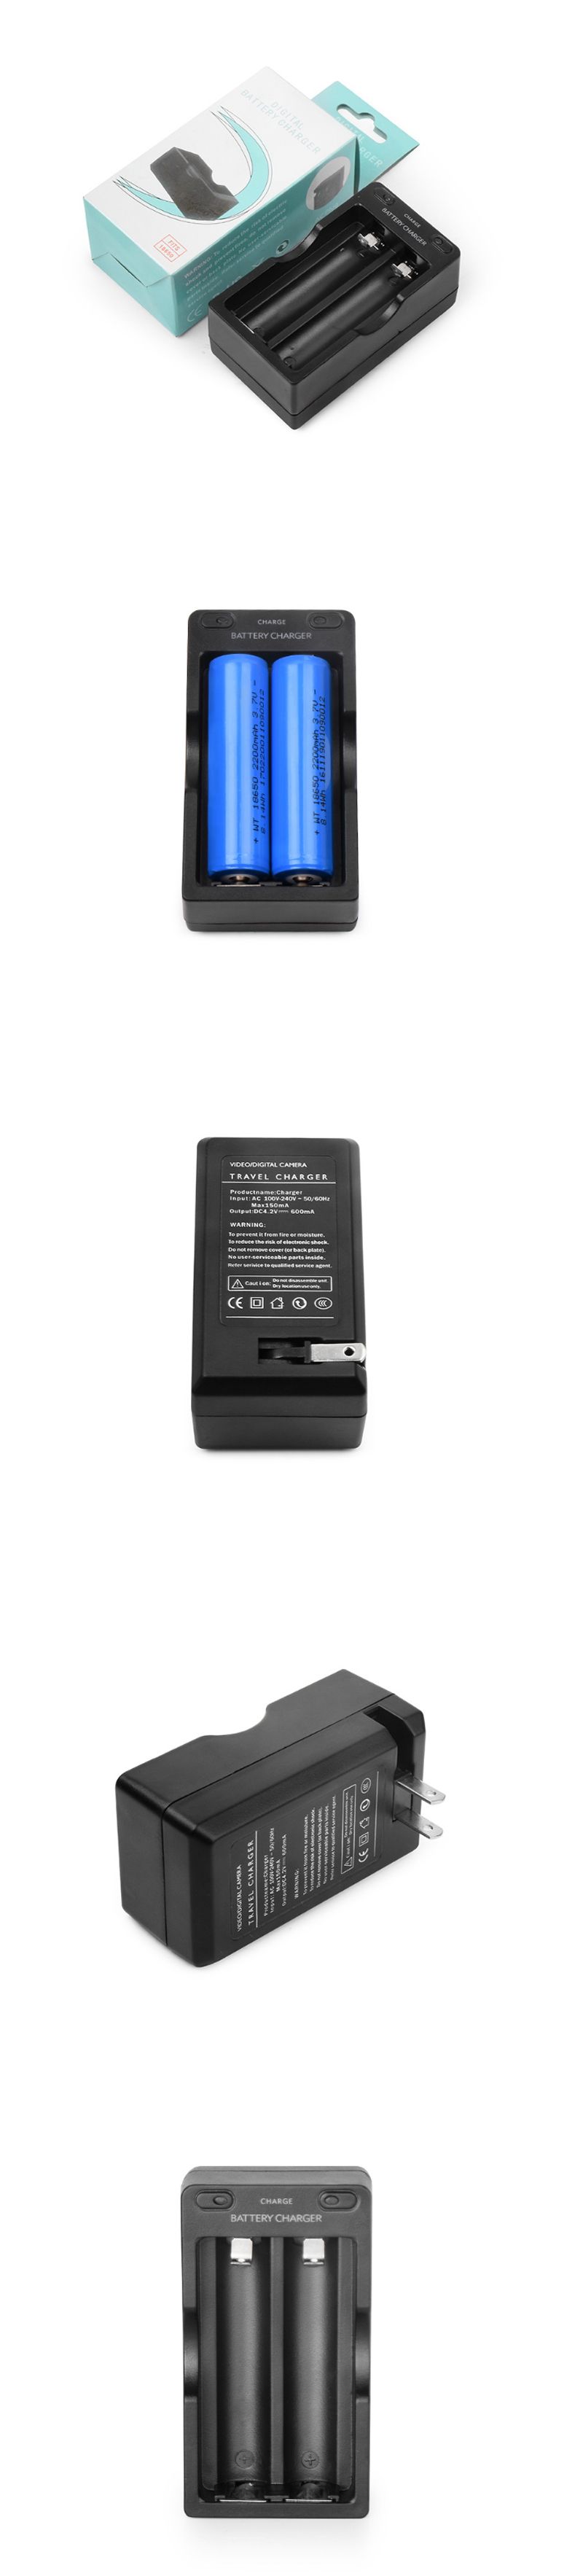 42V-18650-Battery-Charger-2-Slot-Portable-Smart-Battery-Charging-1613971